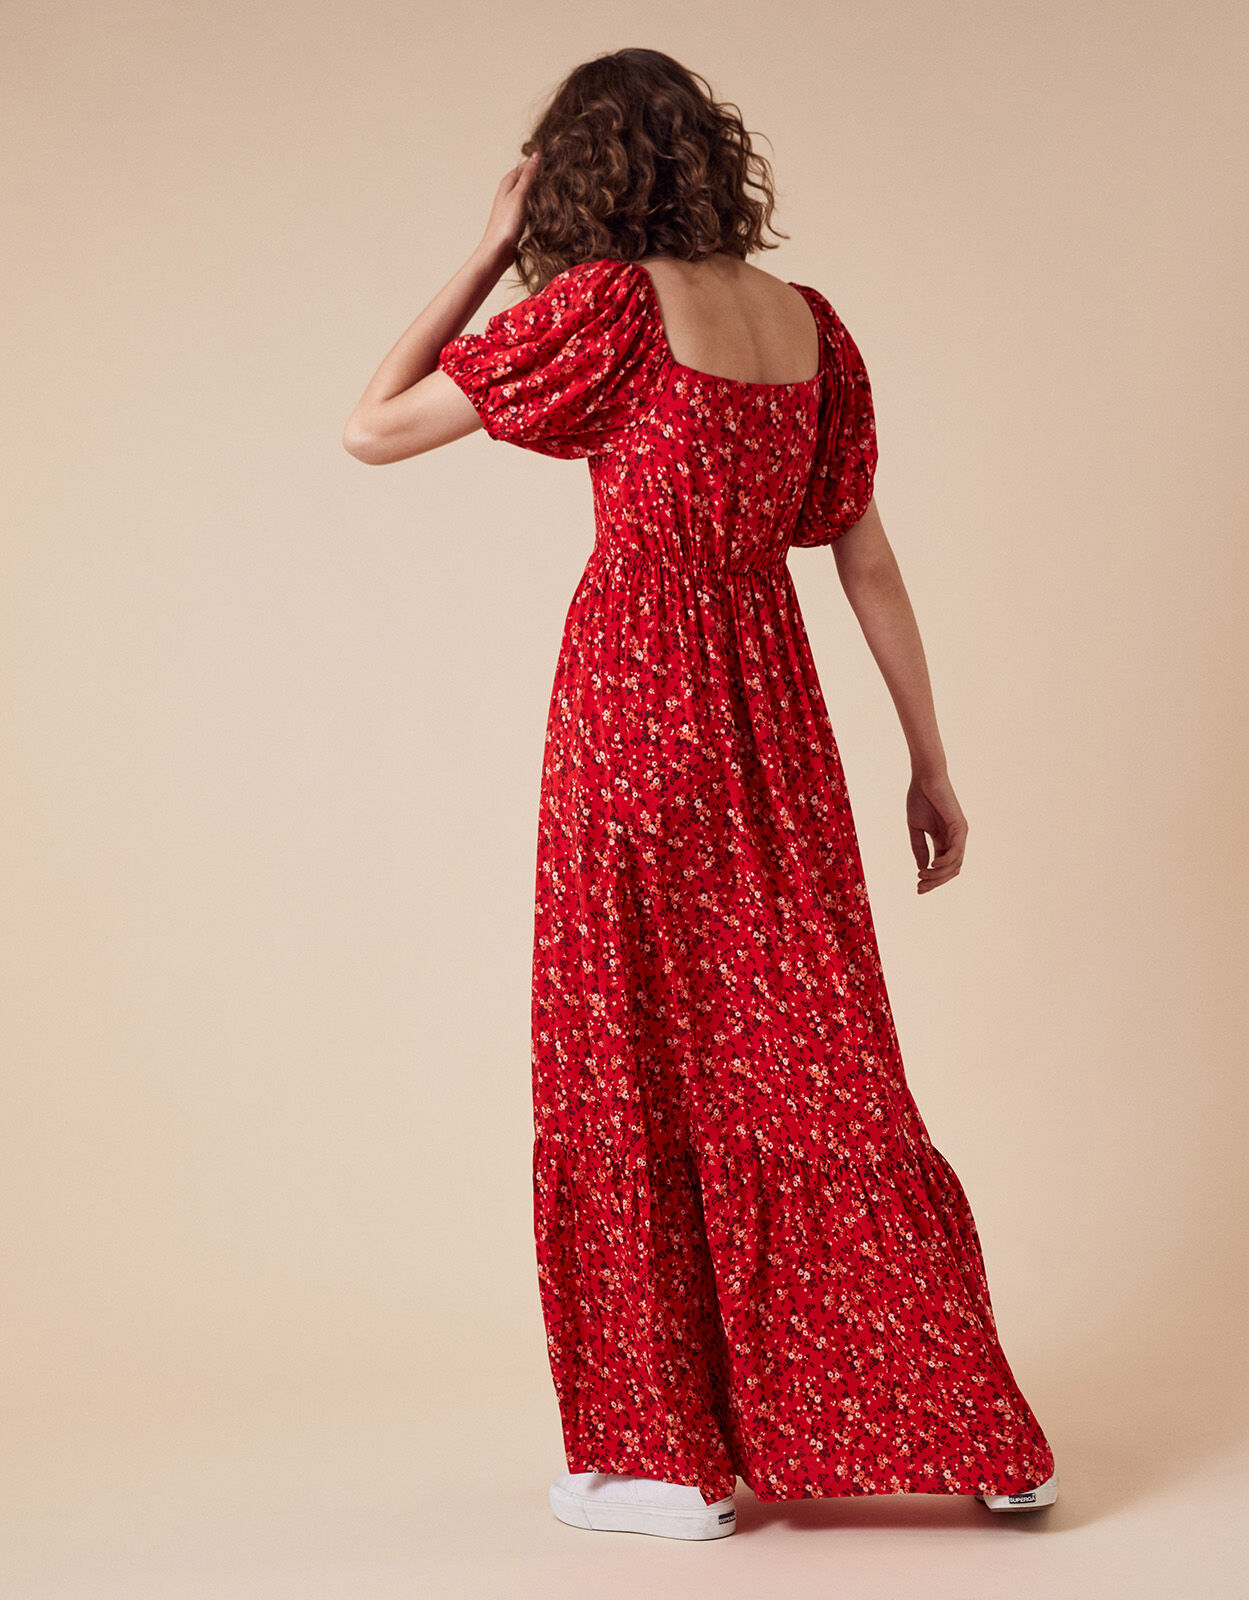 red floral maxi dress uk